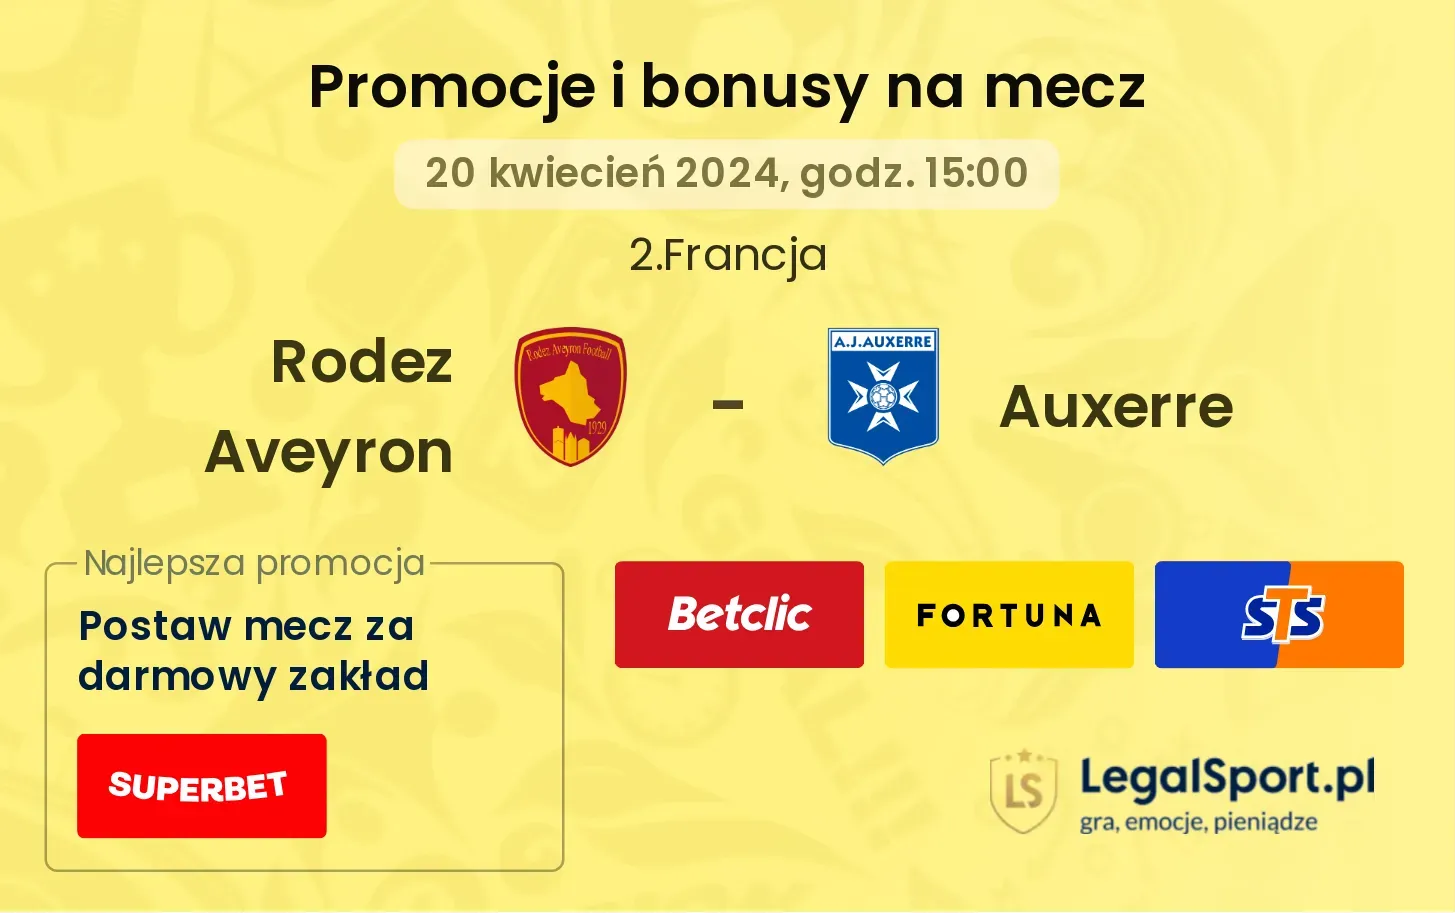 Rodez Aveyron - Auxerre promocje bonusy na mecz